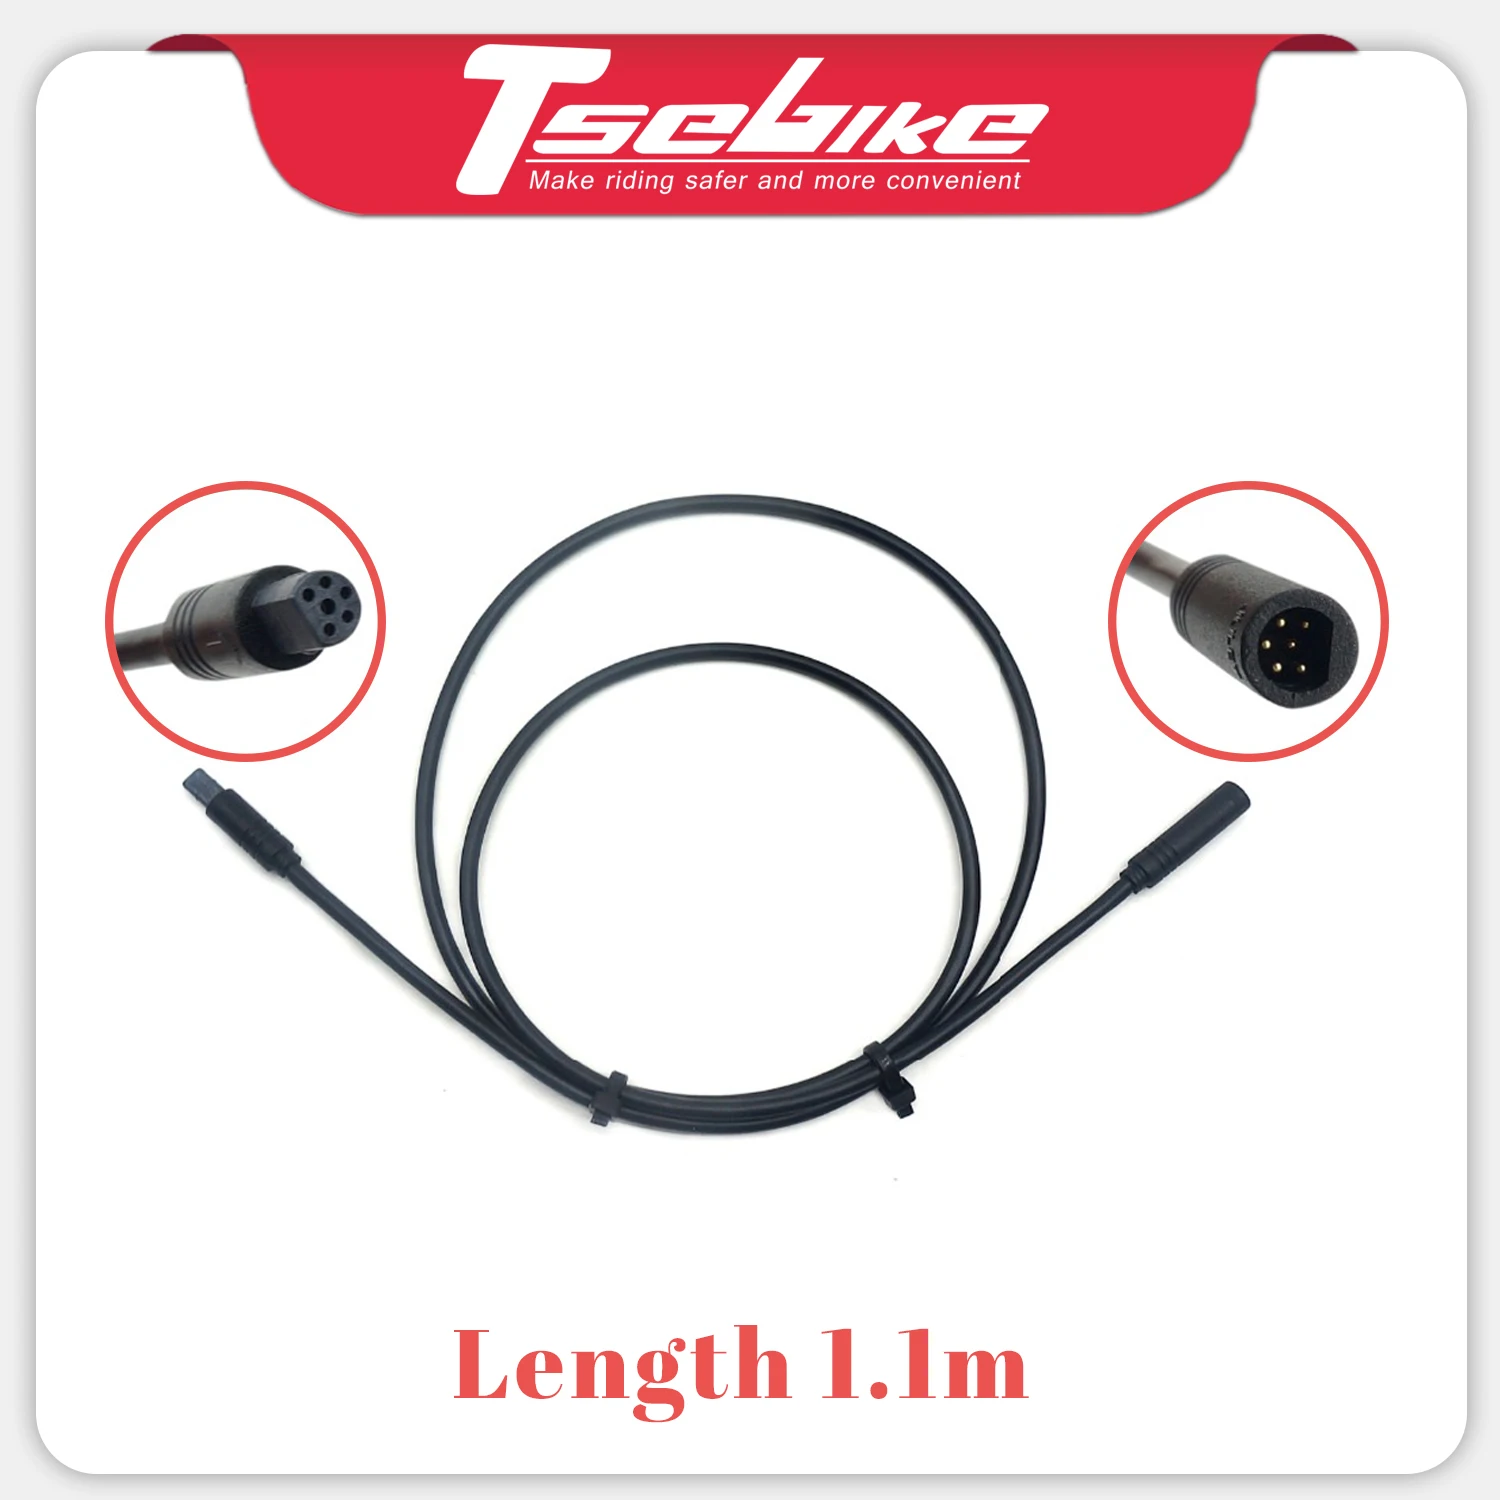 

TongSheng Extension Cable for Display Speed Sensor TSDZ2 Mid Drive Motor ebike conversion kit